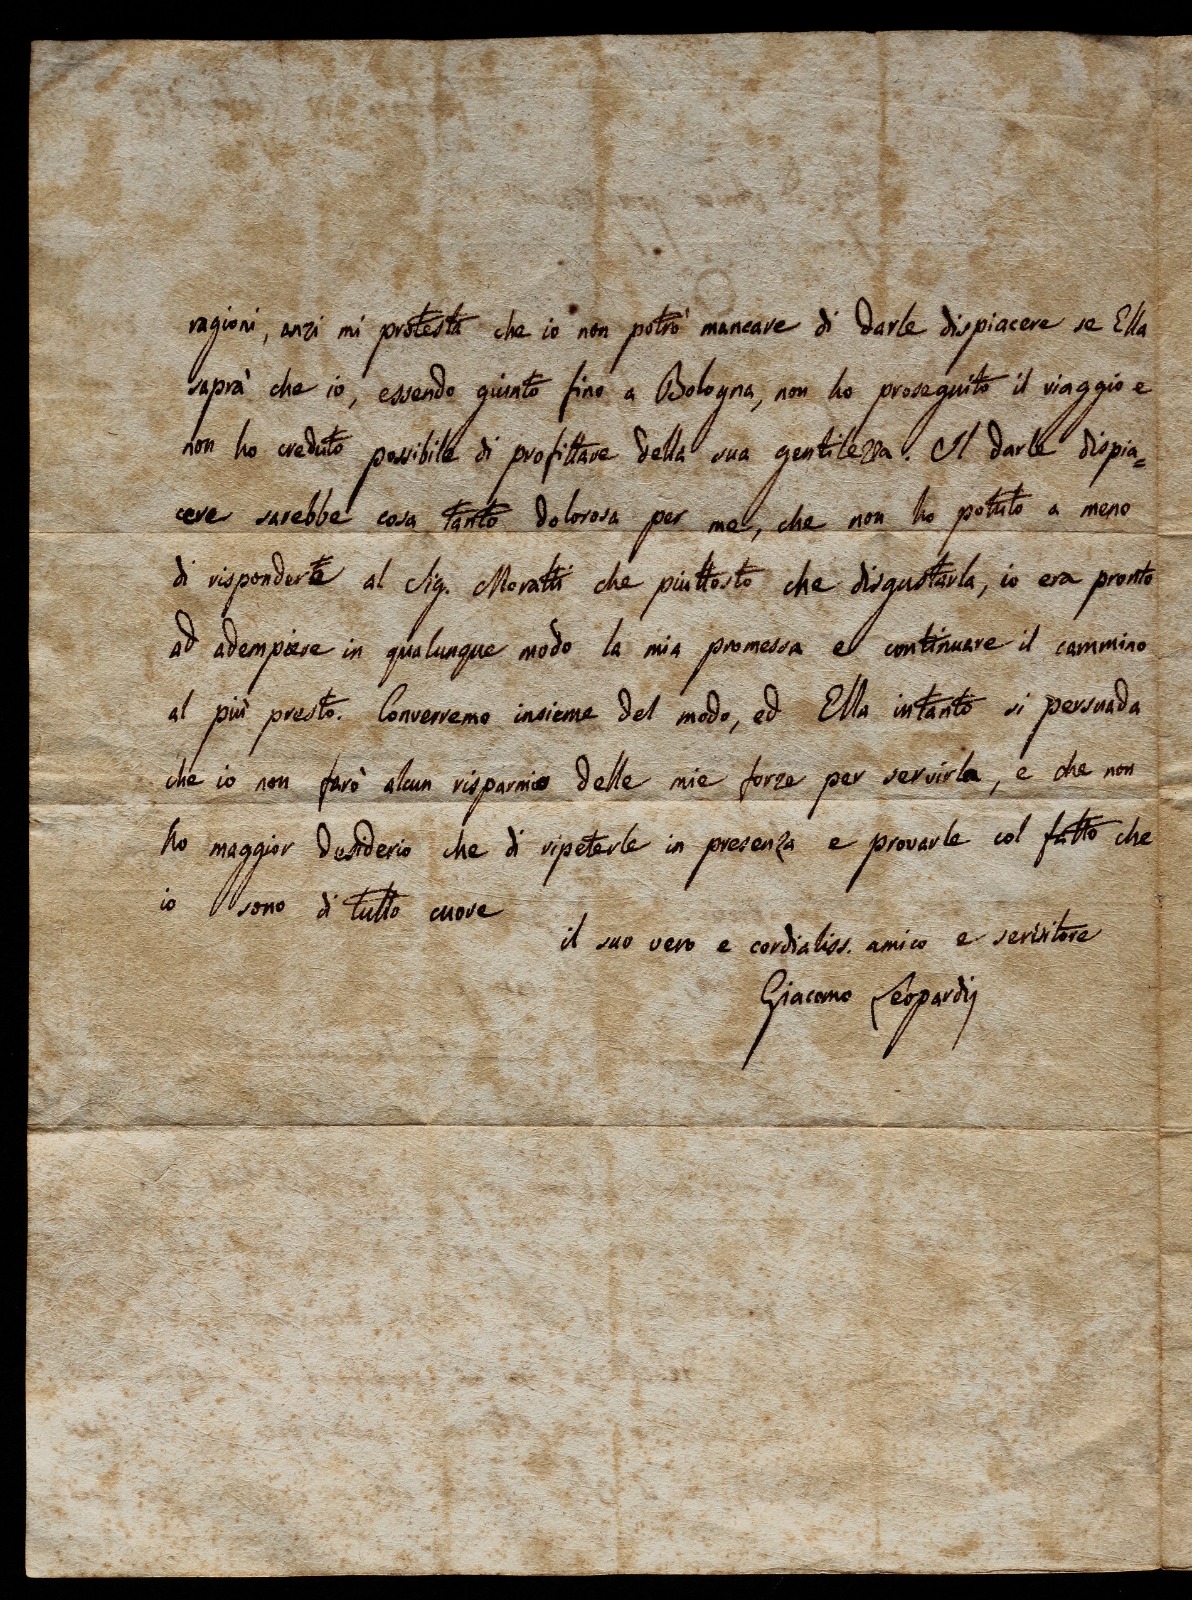 lettera autografata di Giacomo Leopardi